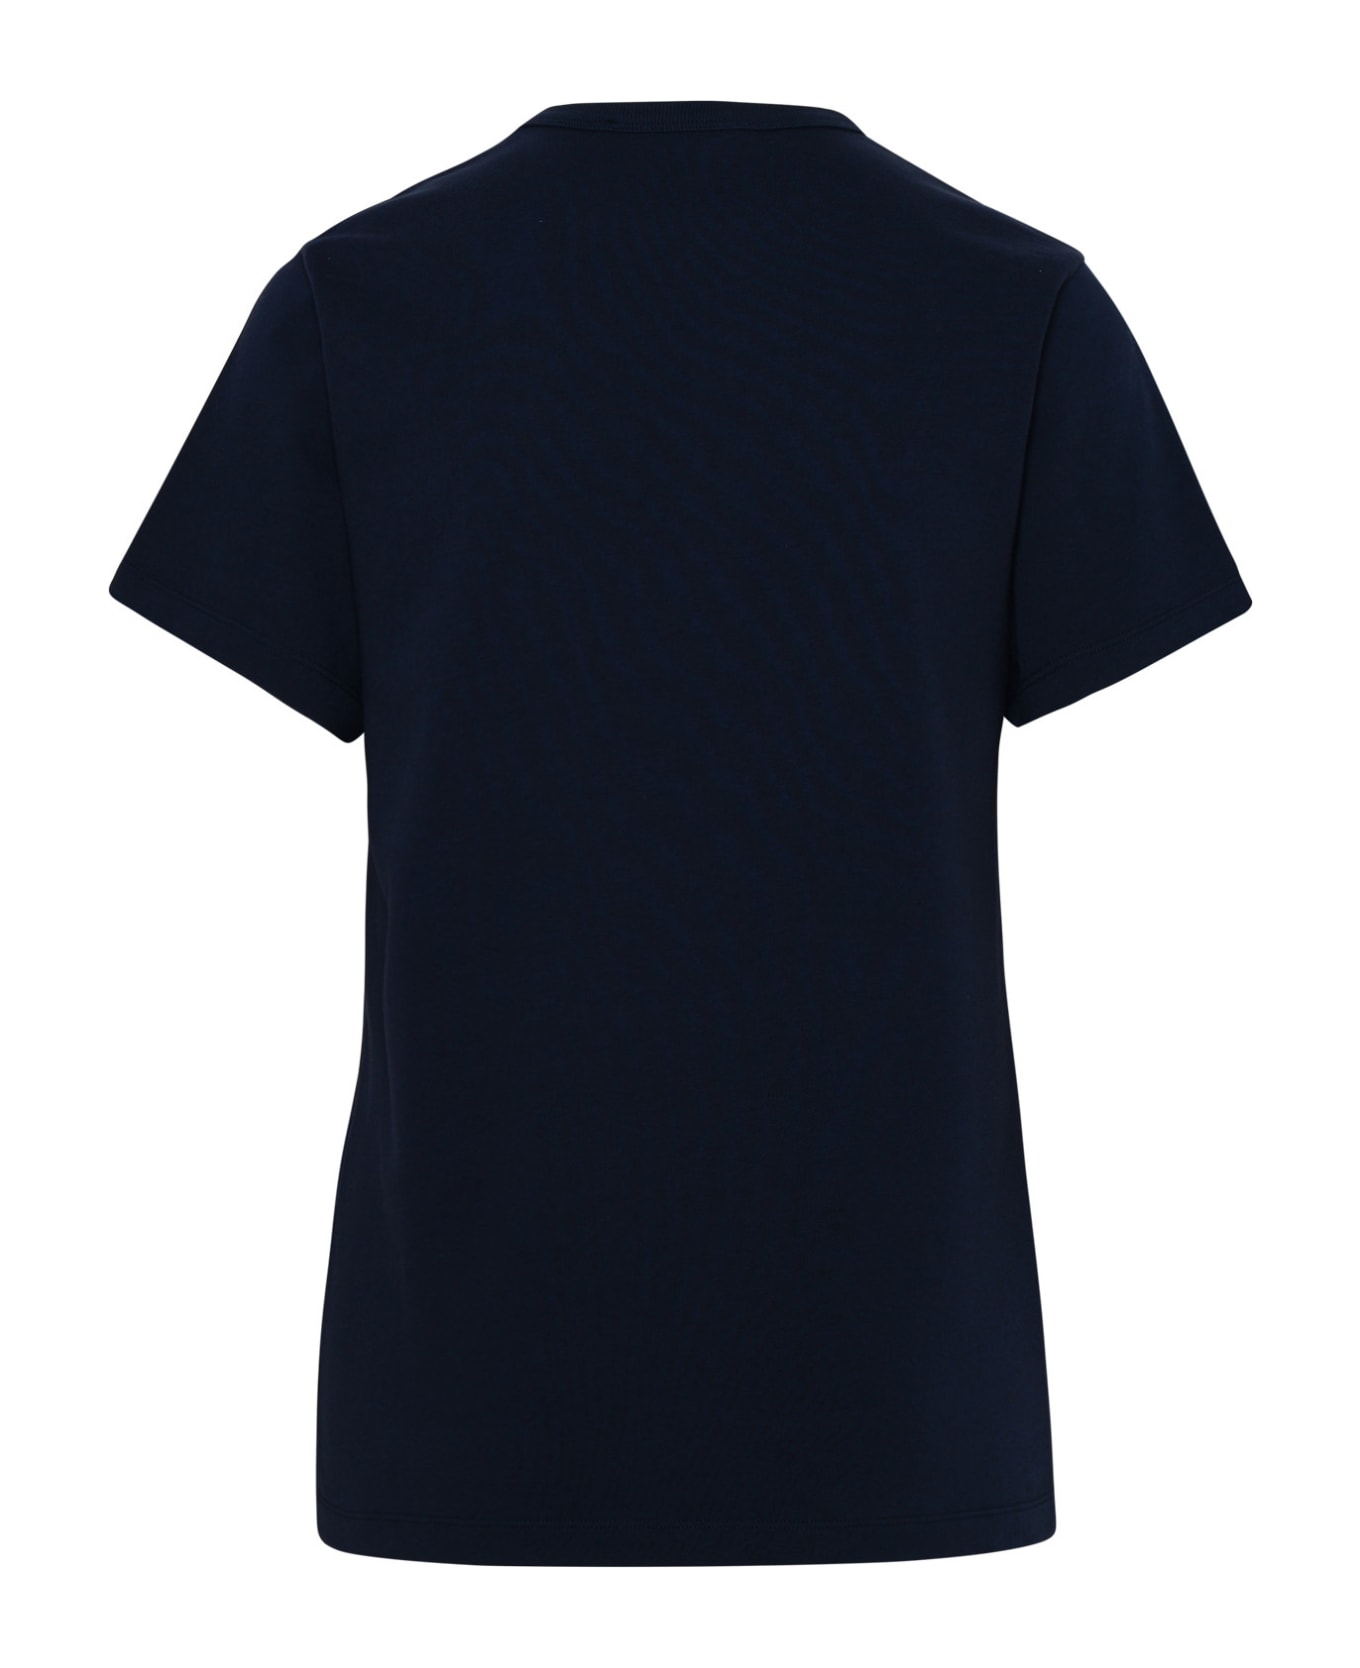 Maison Kitsuné Blue Cotton T-shirt - Navy